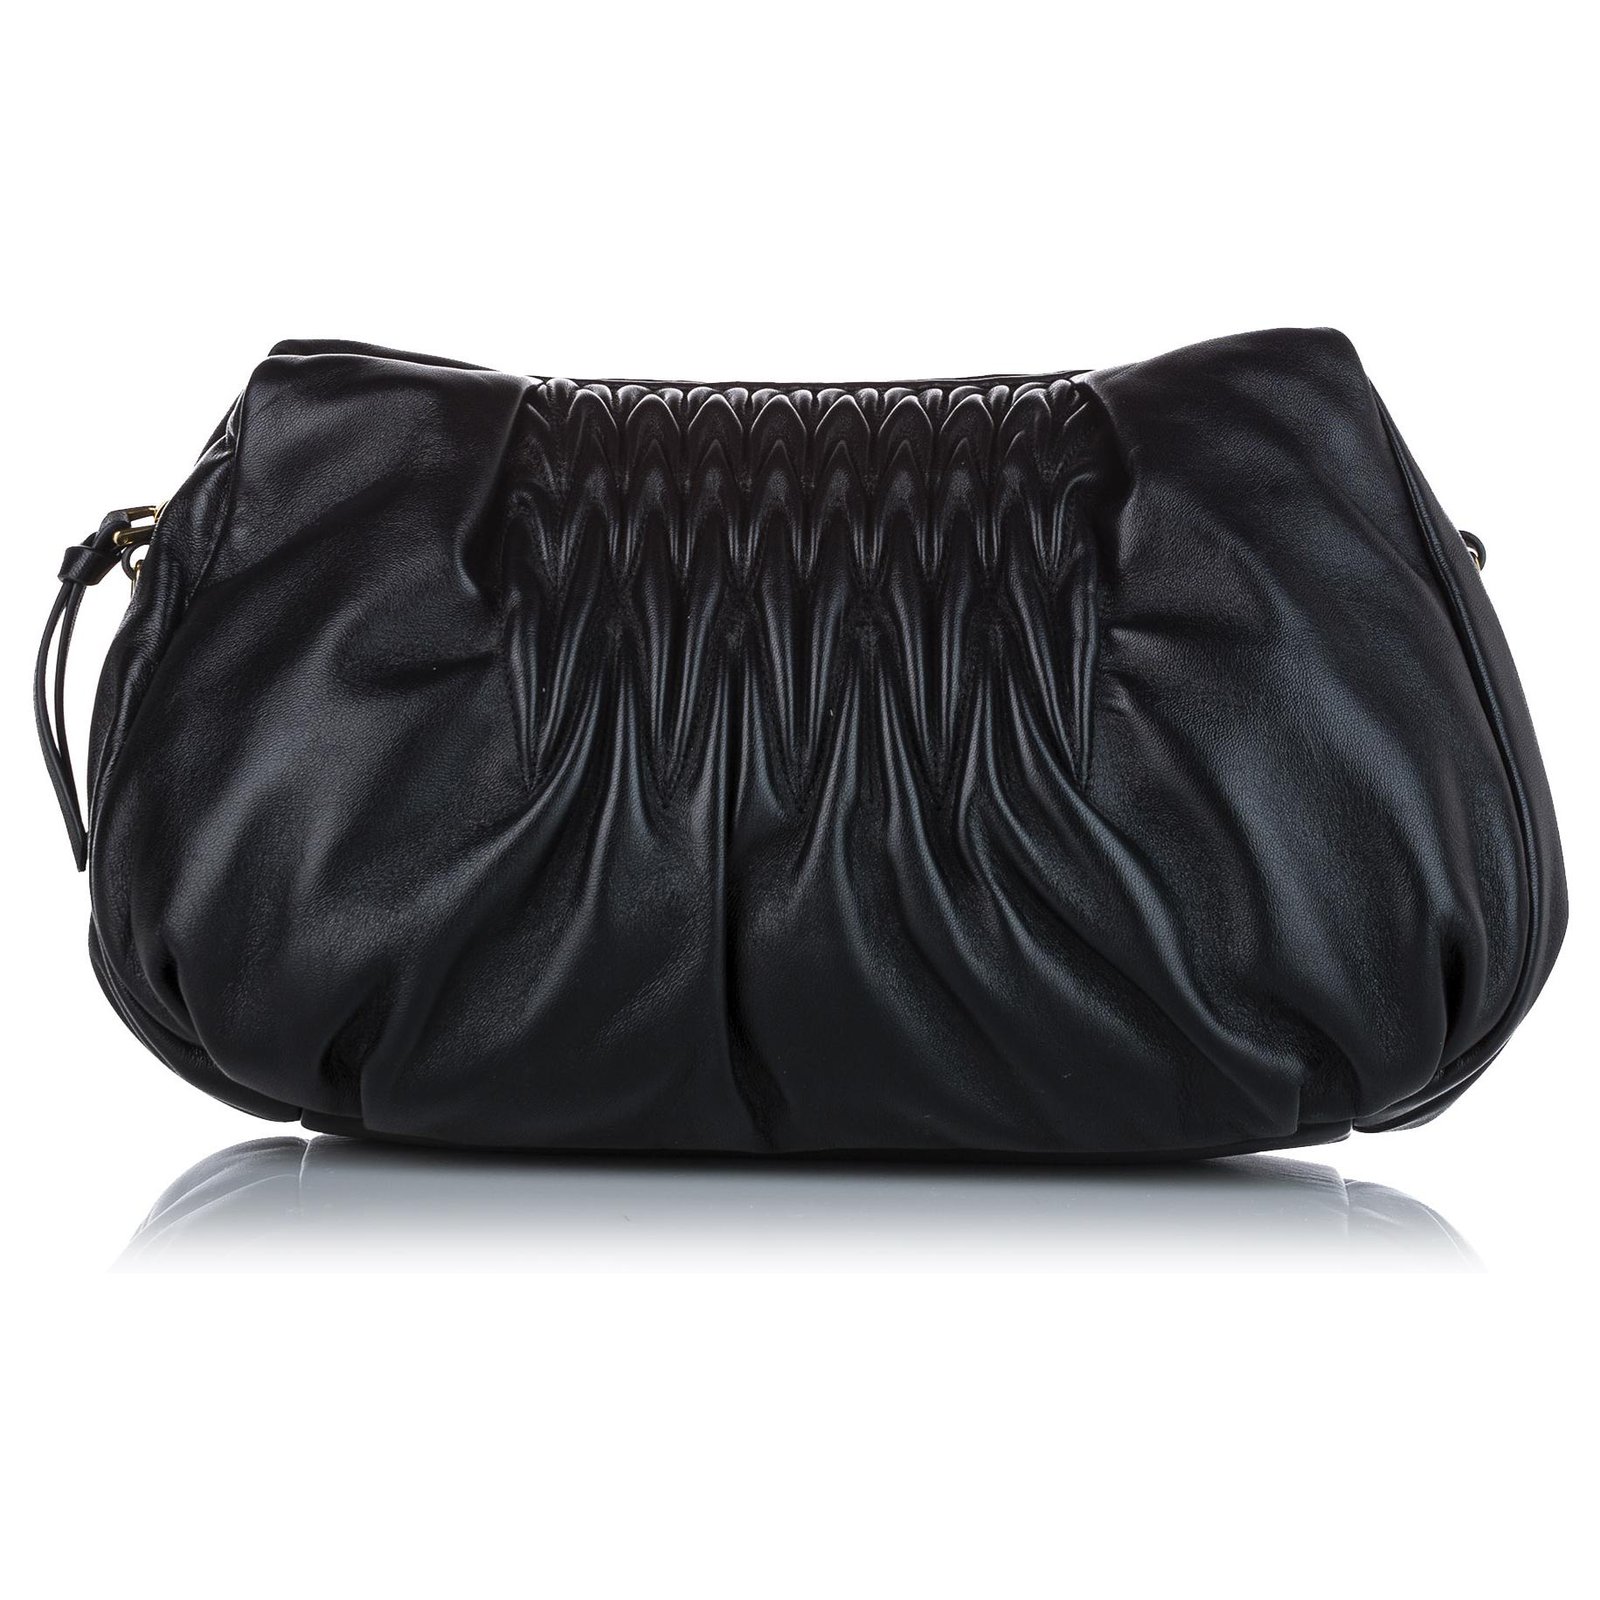 Women's Matelasse Nappa Leather Handbag by Miu Miu